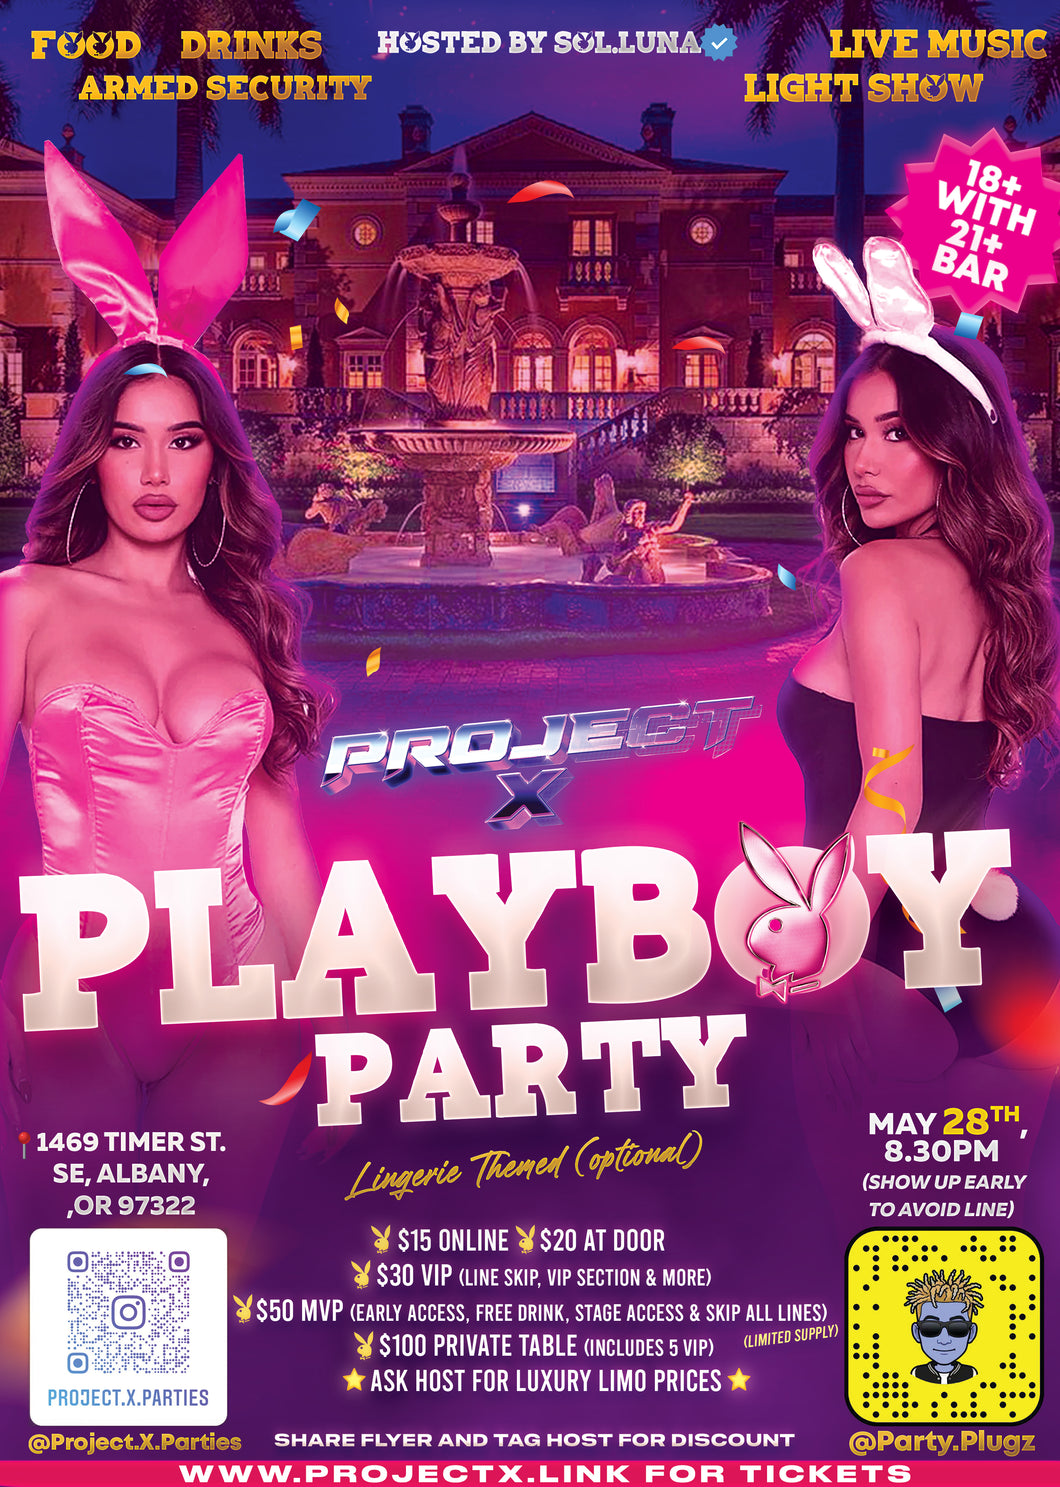 Playboy Party MVP